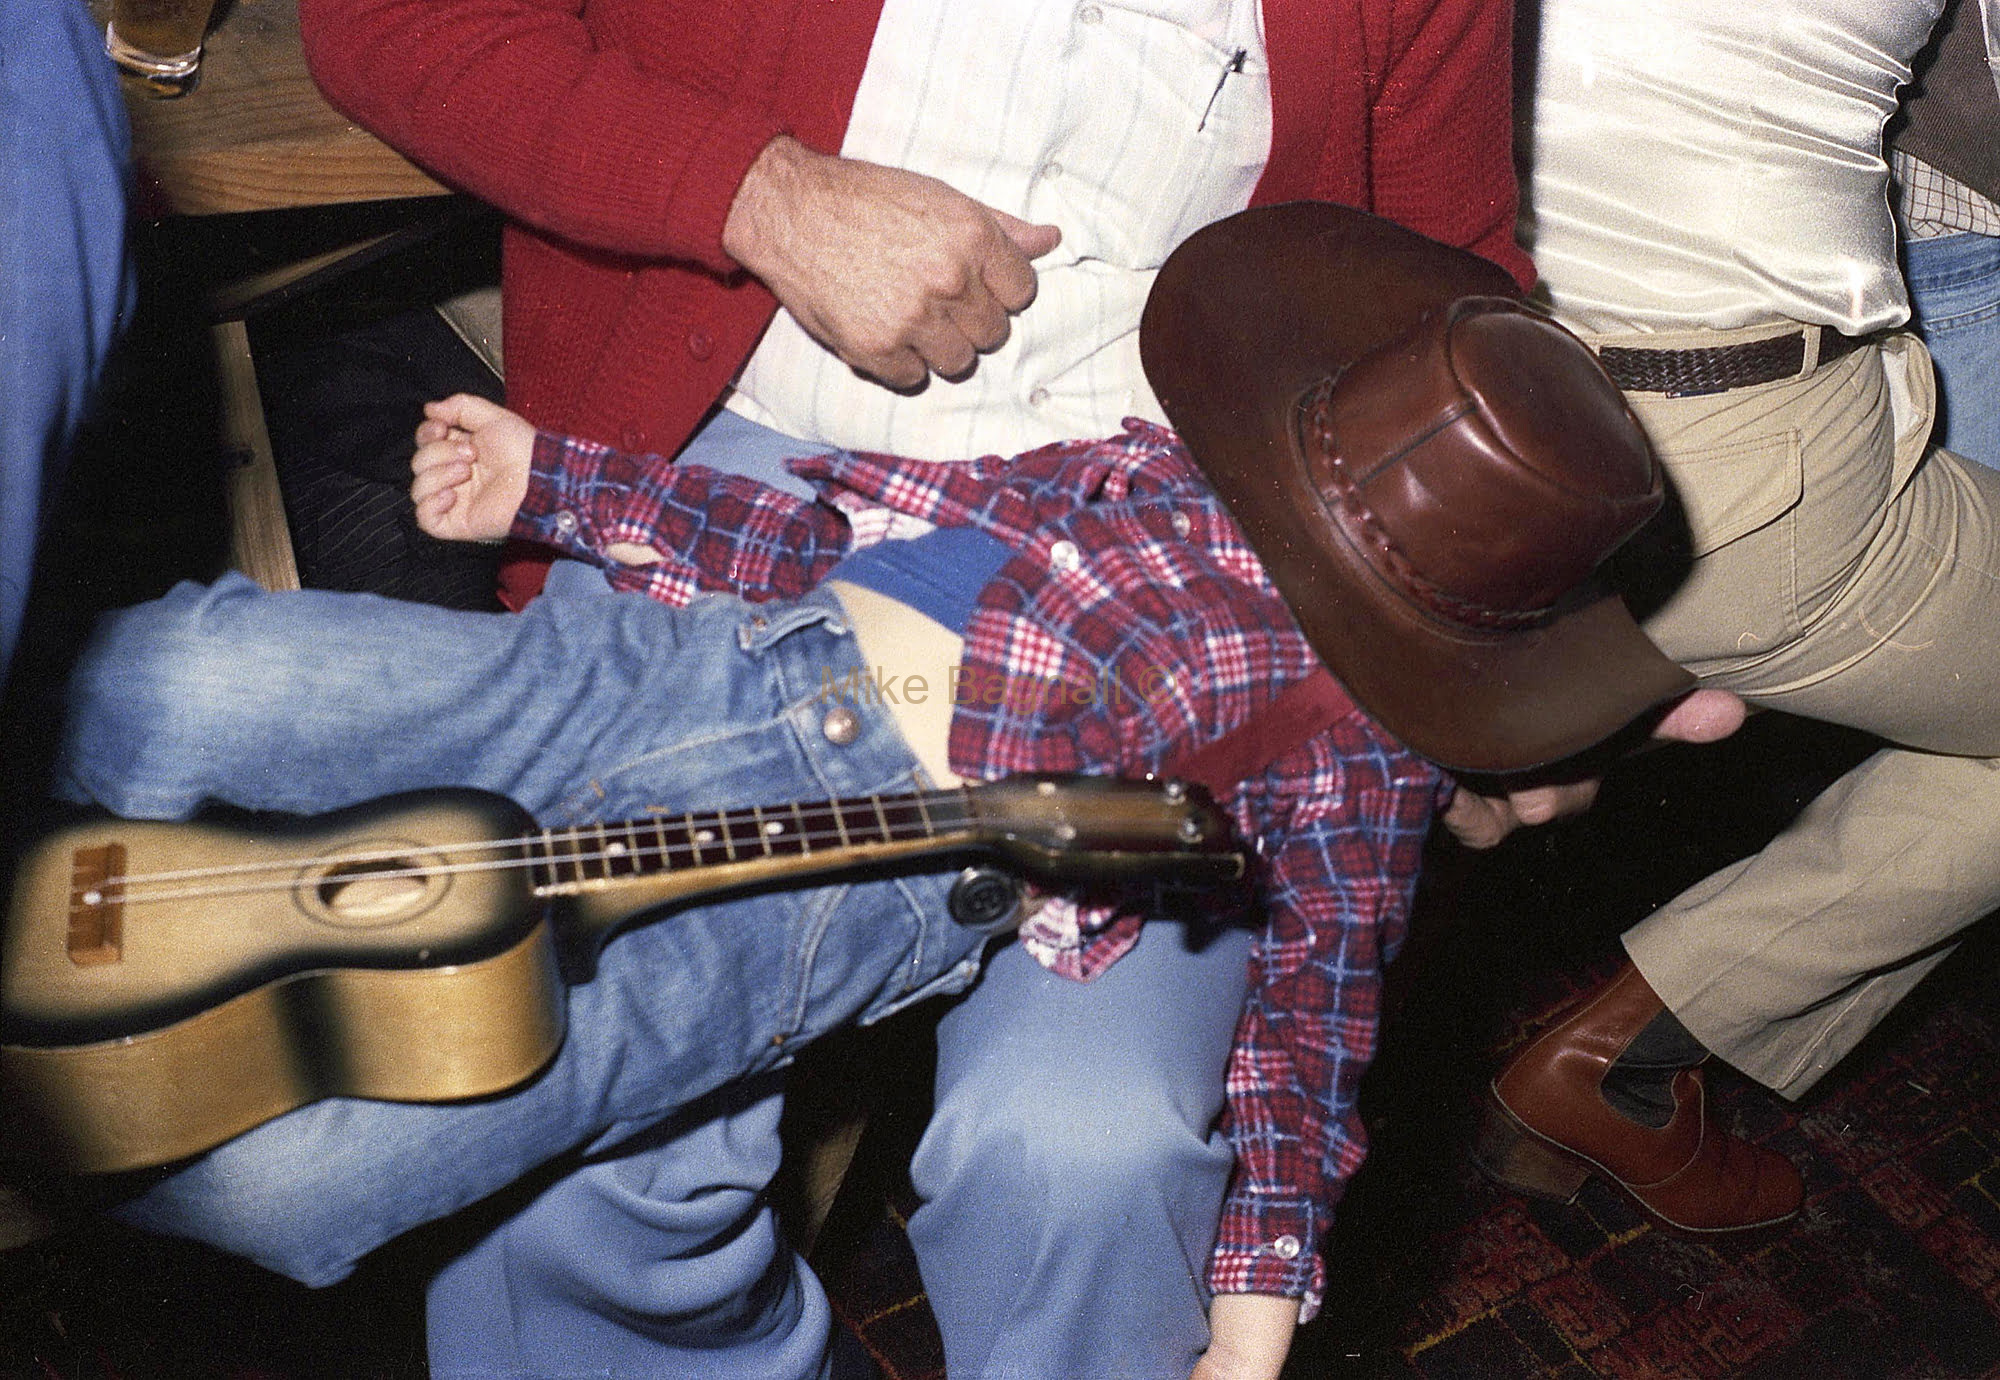 05_Elaine_Benfit_Night_23-Cowboy Clint White falls asleep on dads lap,023